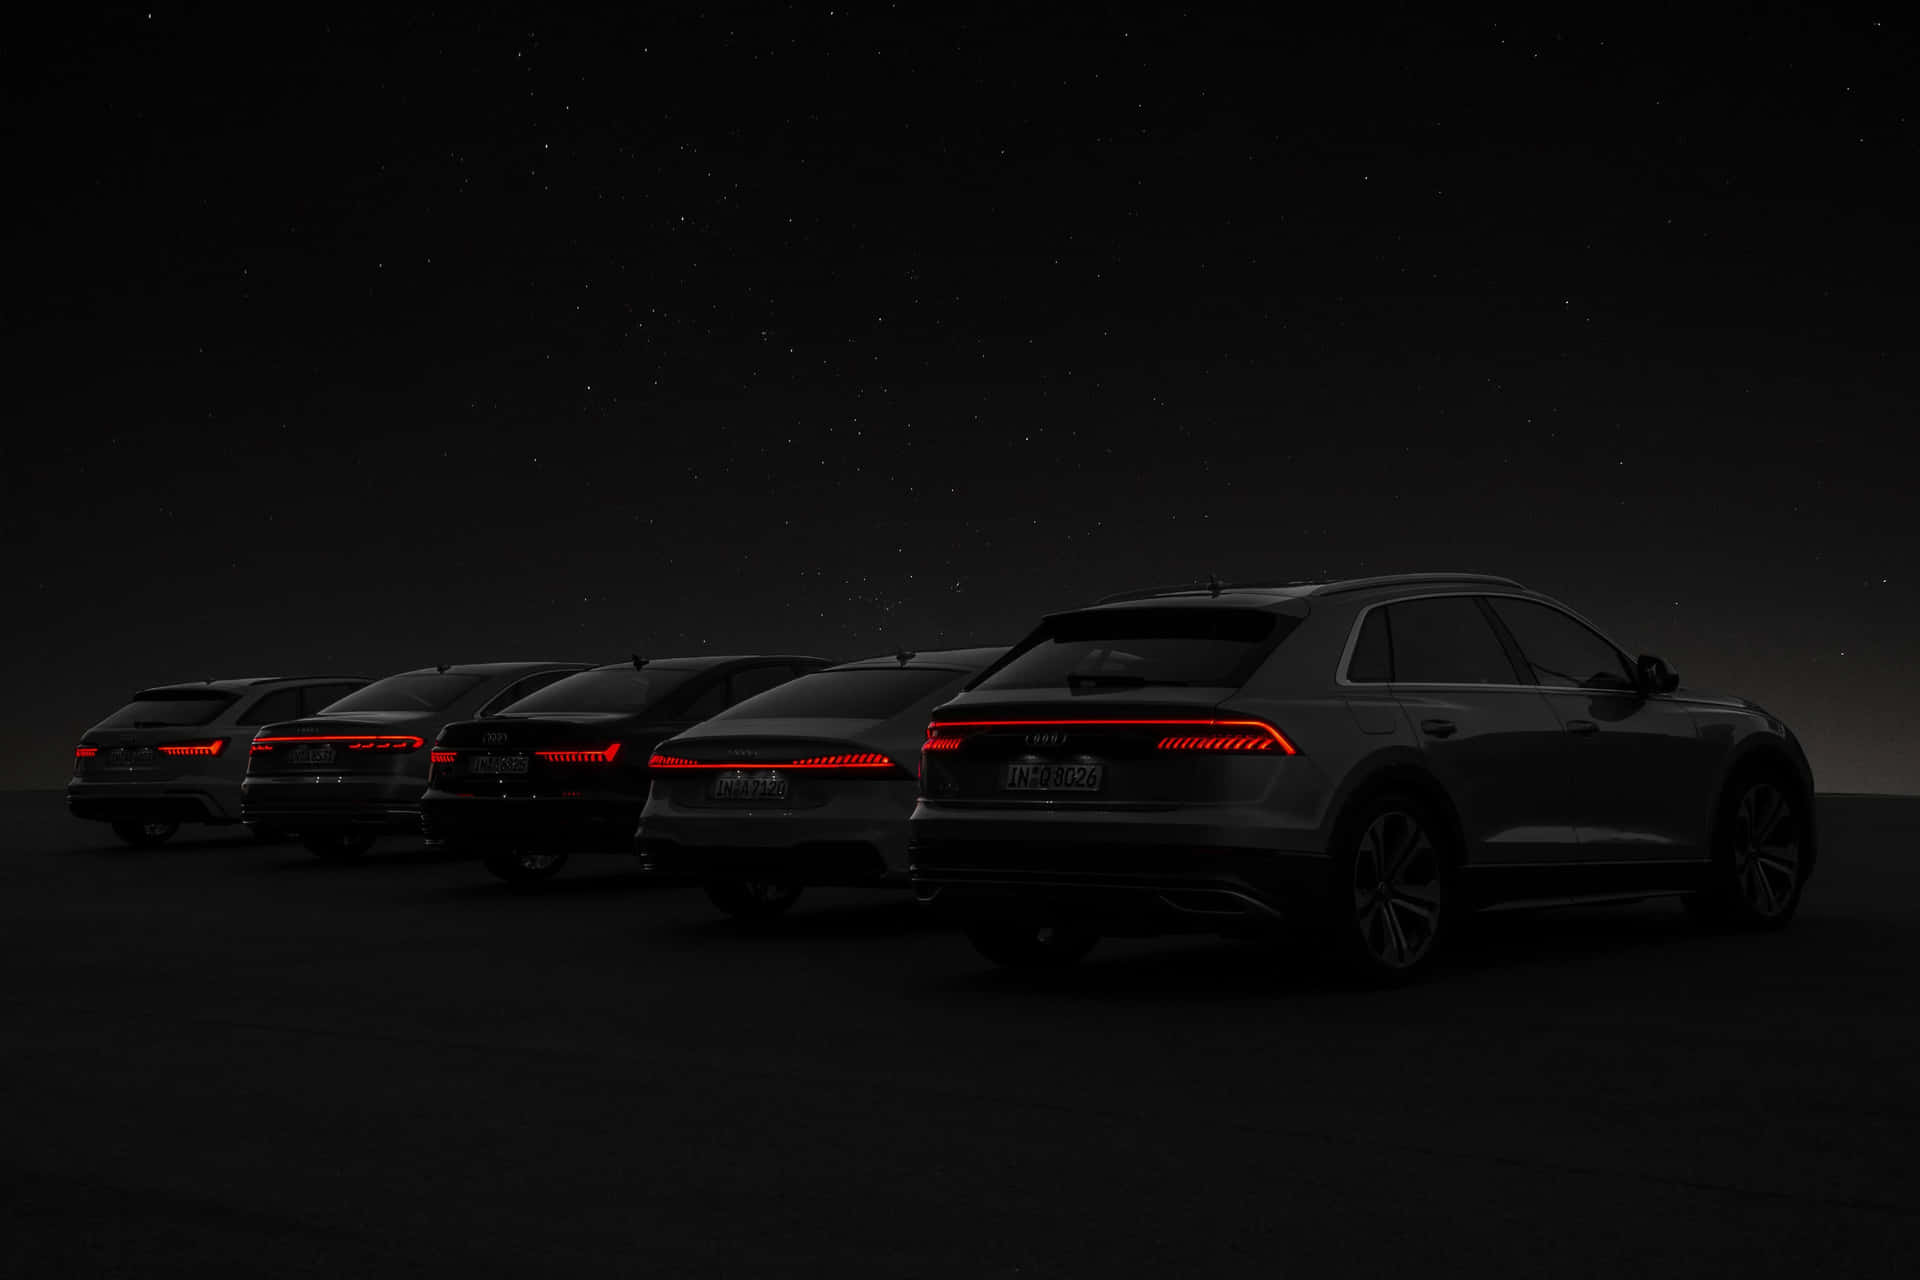 Black Cars Nighttime Formation Wallpaper